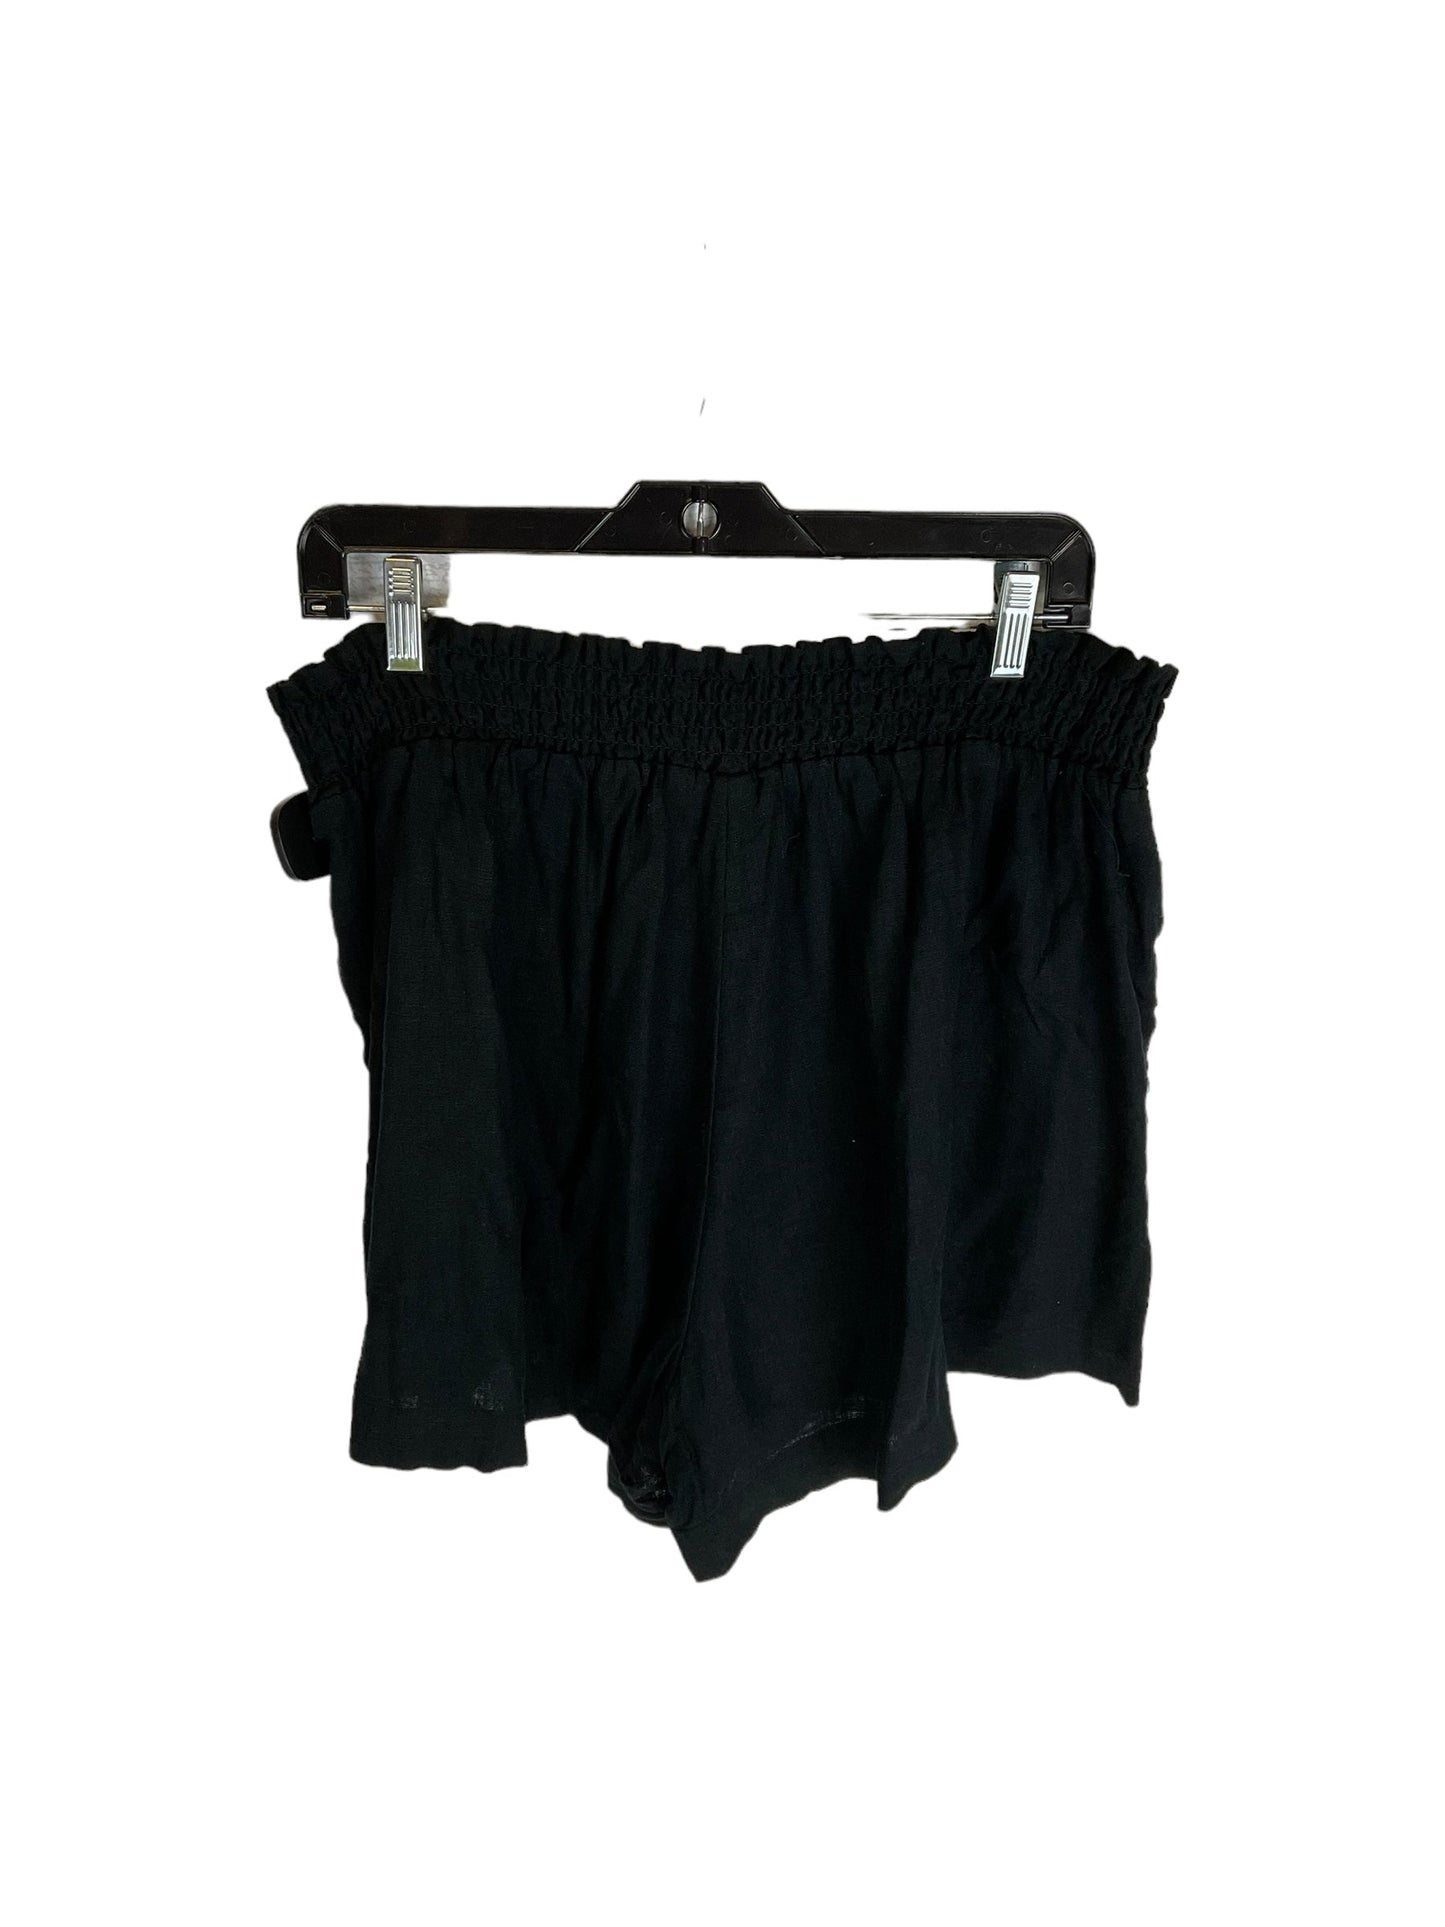 Shorts By Ava & Viv  Size: Xxl